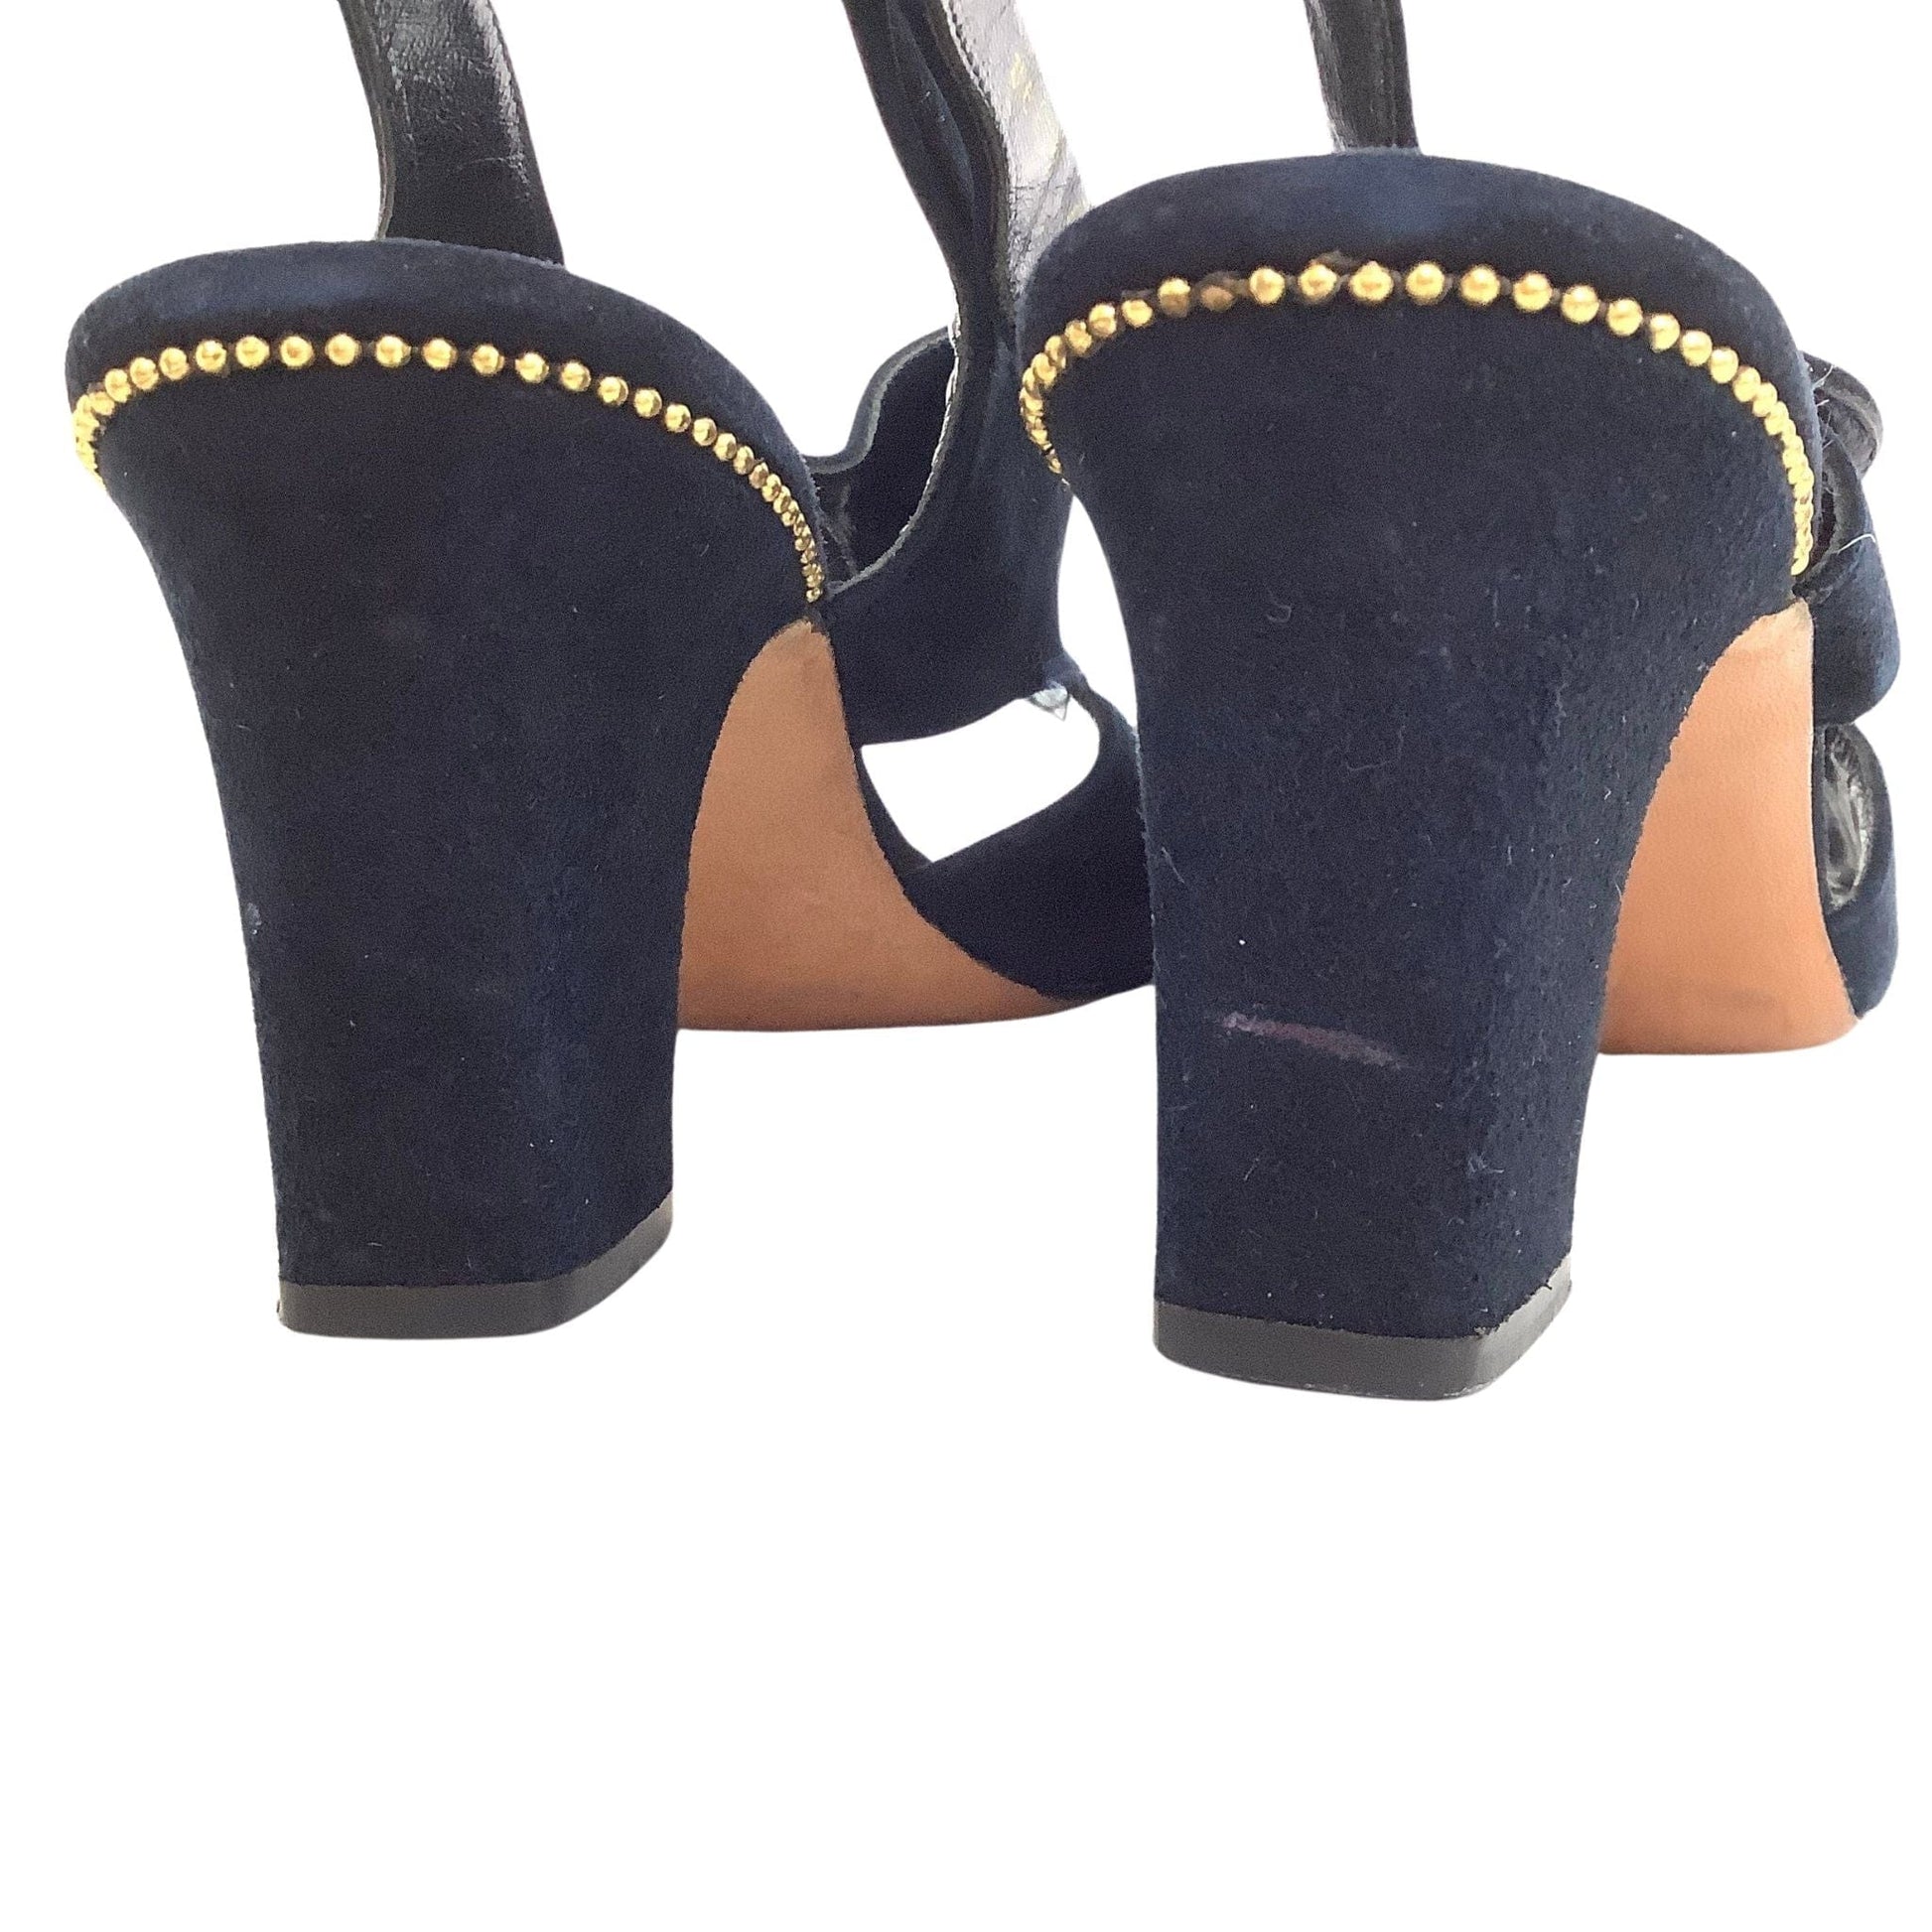 Amano Heeled Sandals 7.5 / Black / Vintage 1980s